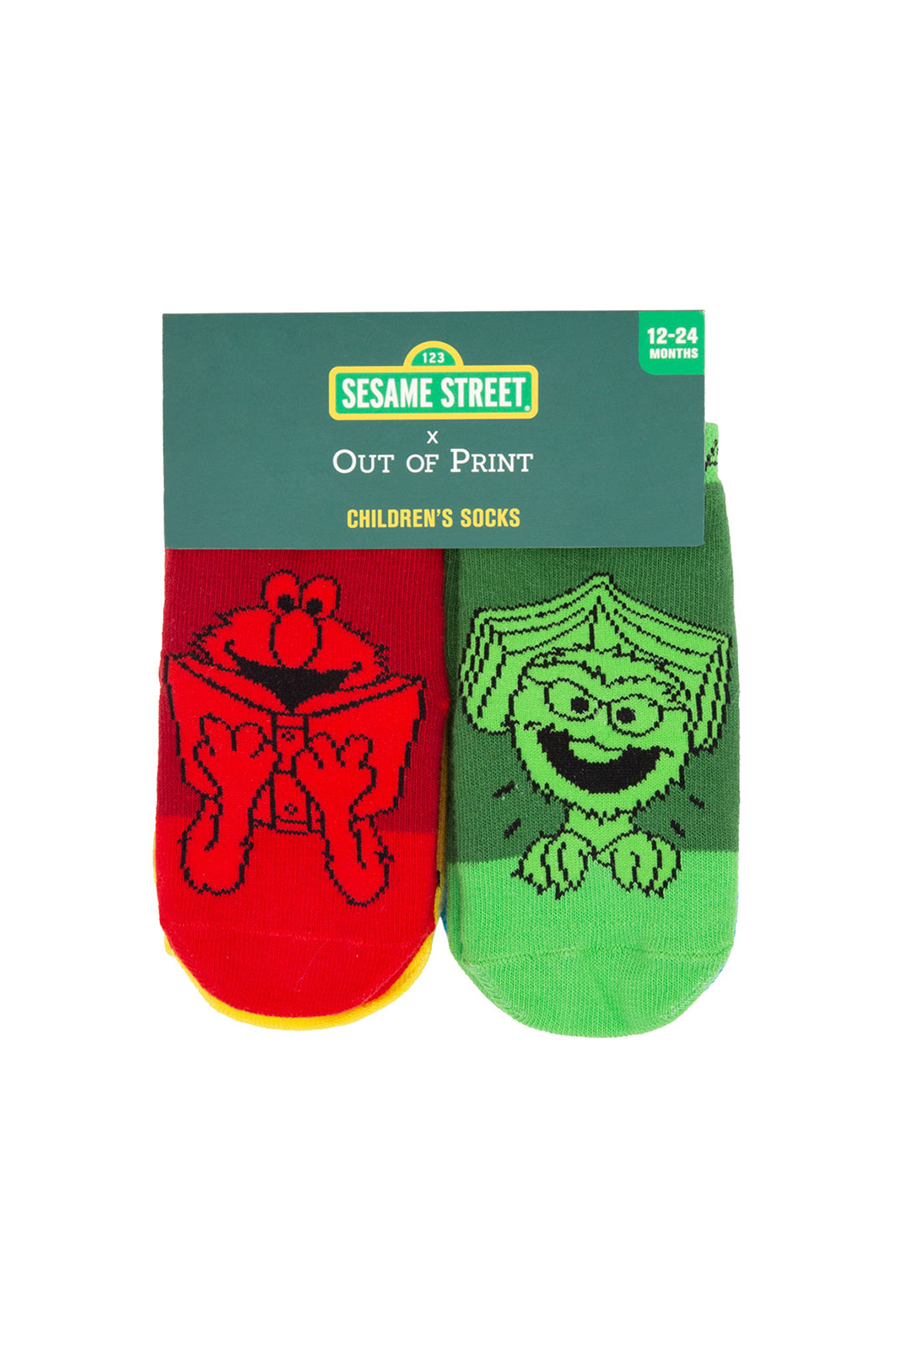 Sesame Street Socks | 4 Pack - Main Image Number 1 of 1